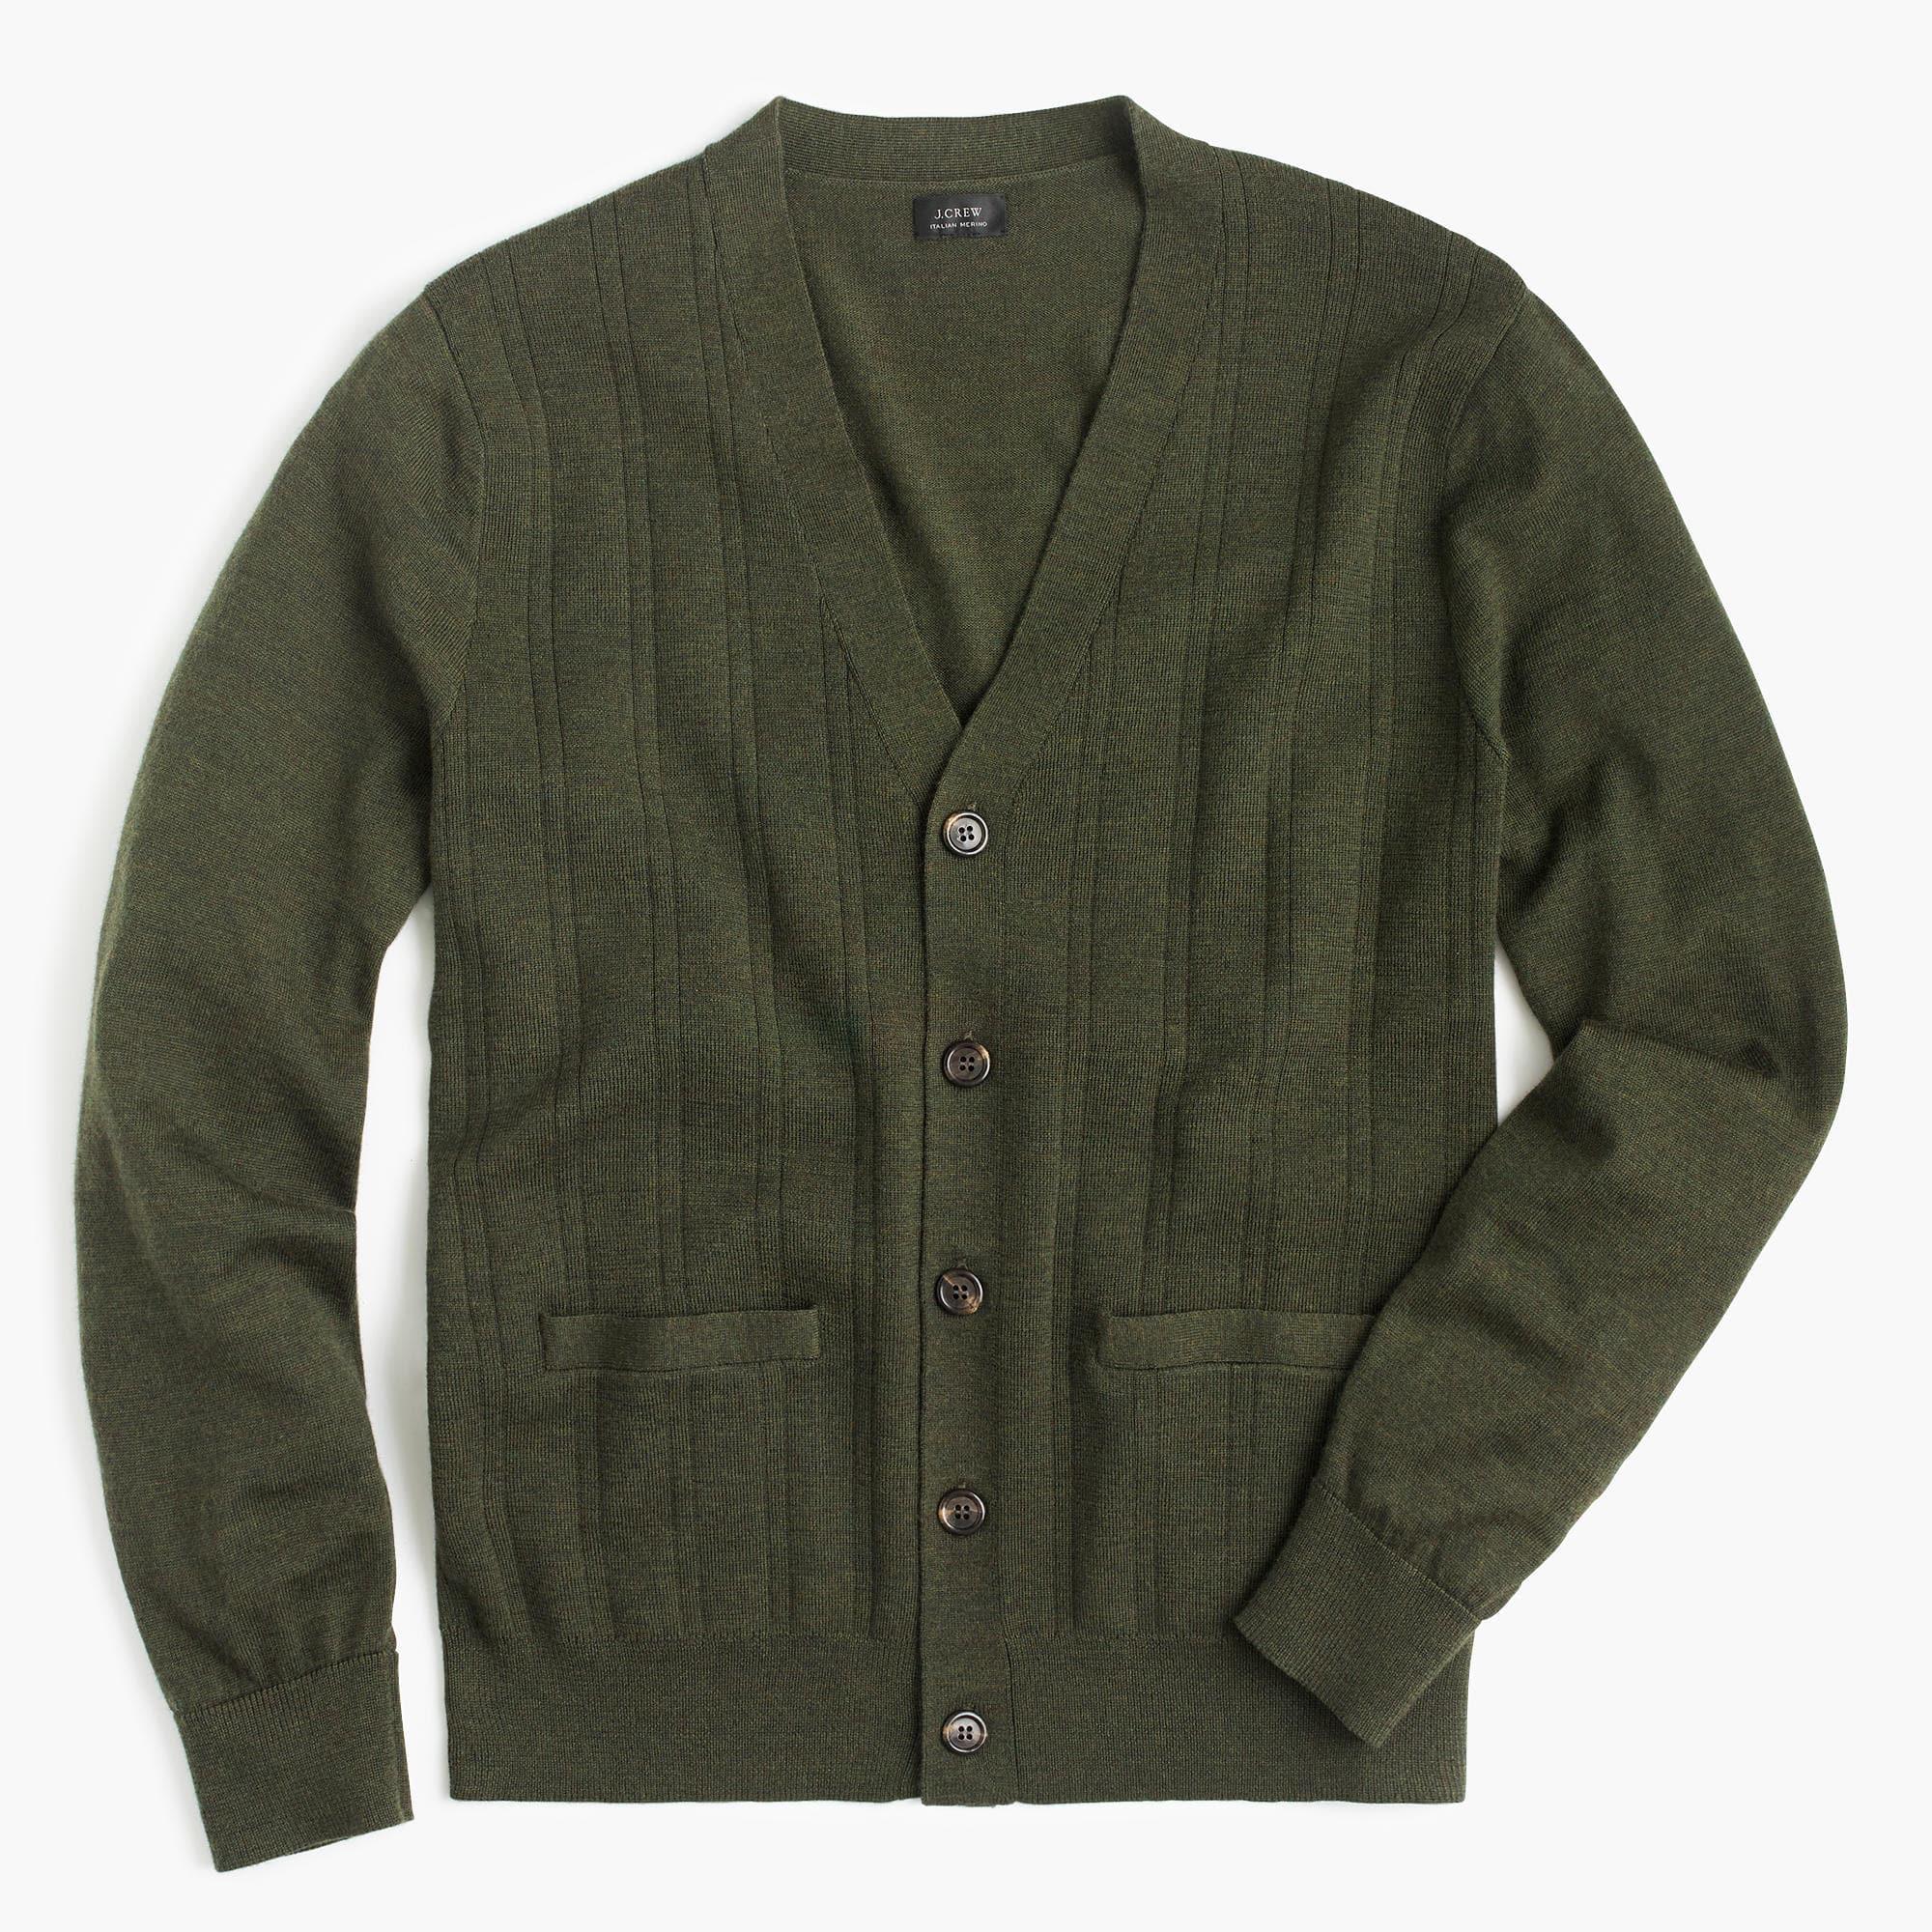 J.Crew Italian Merino Wool Cardigan Sweater In Forest Green for Men - Lyst